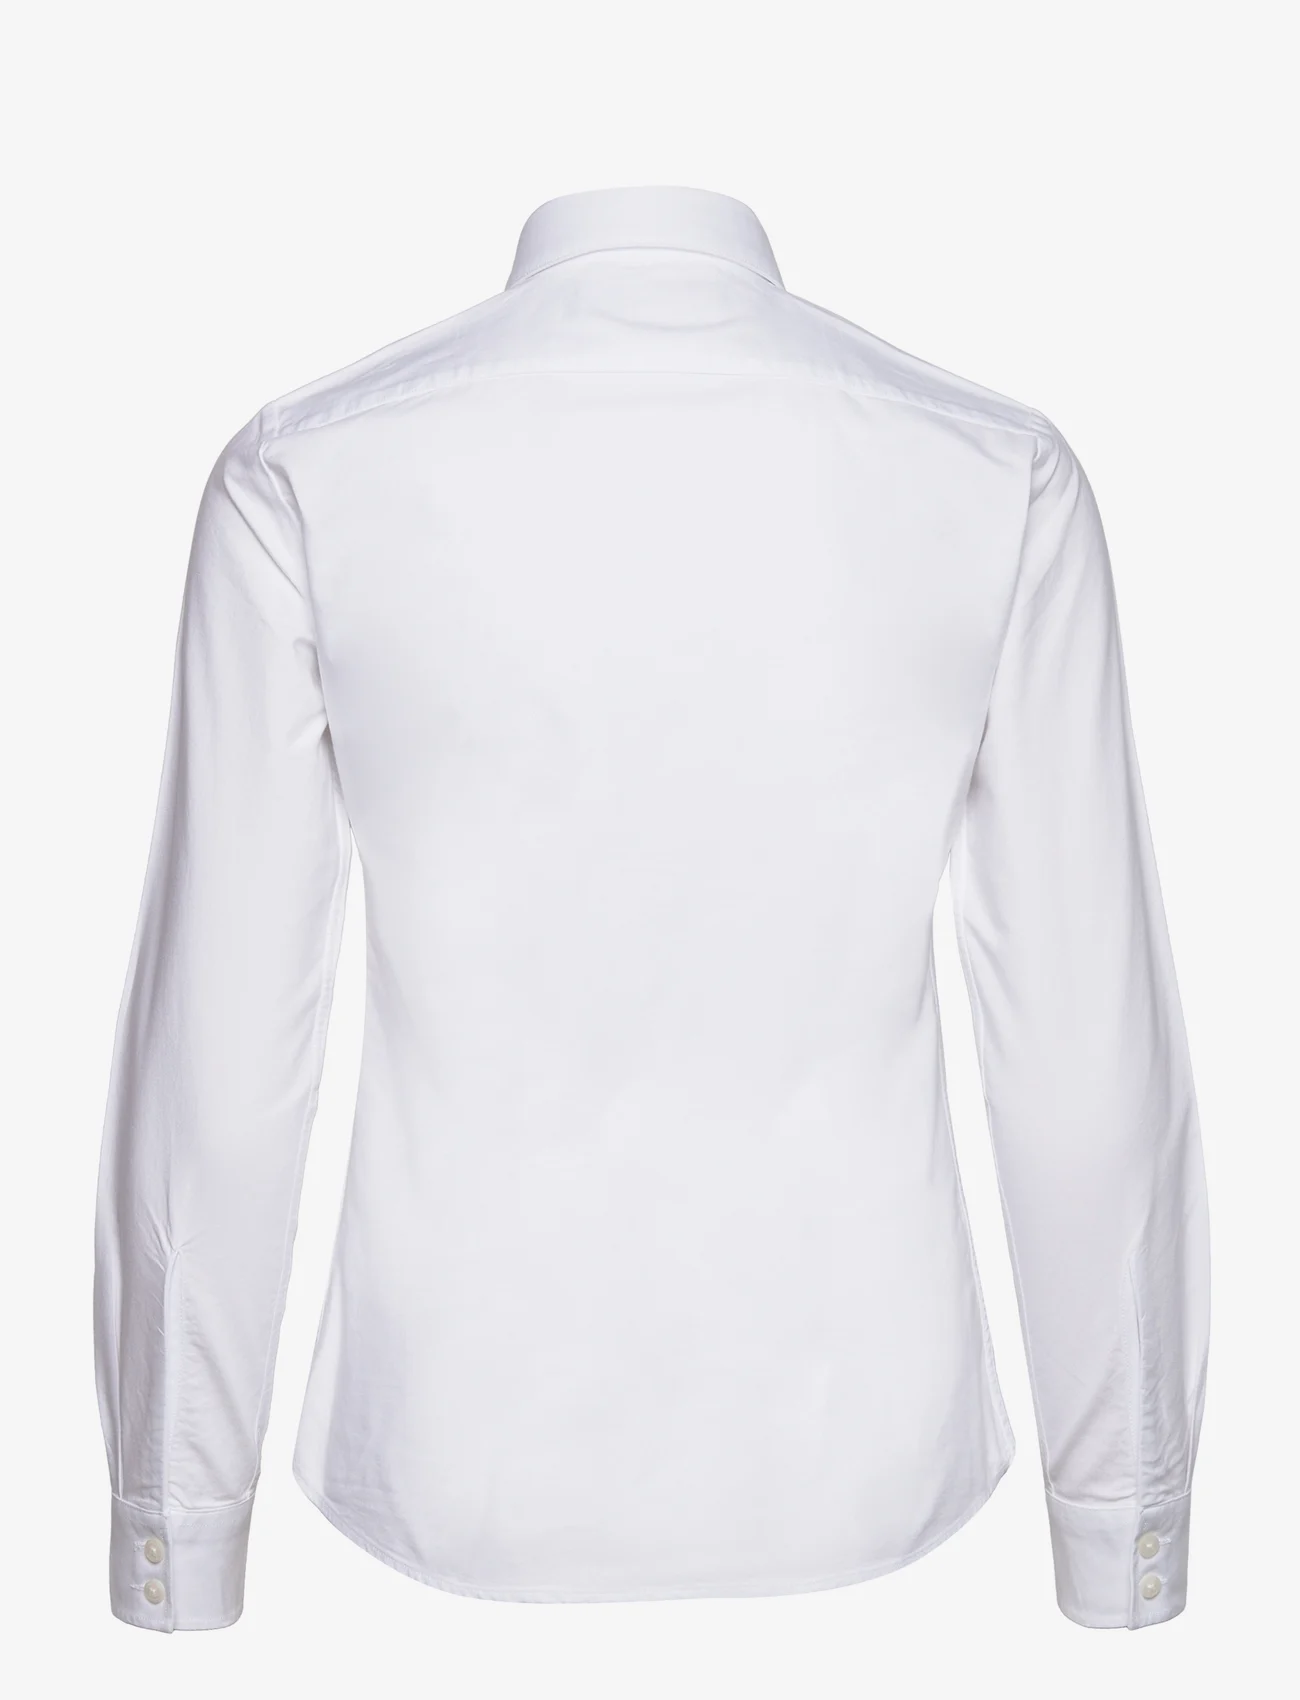 Musto - OXF LS SHIRT FW - long-sleeved shirts - 002 bright white - 1